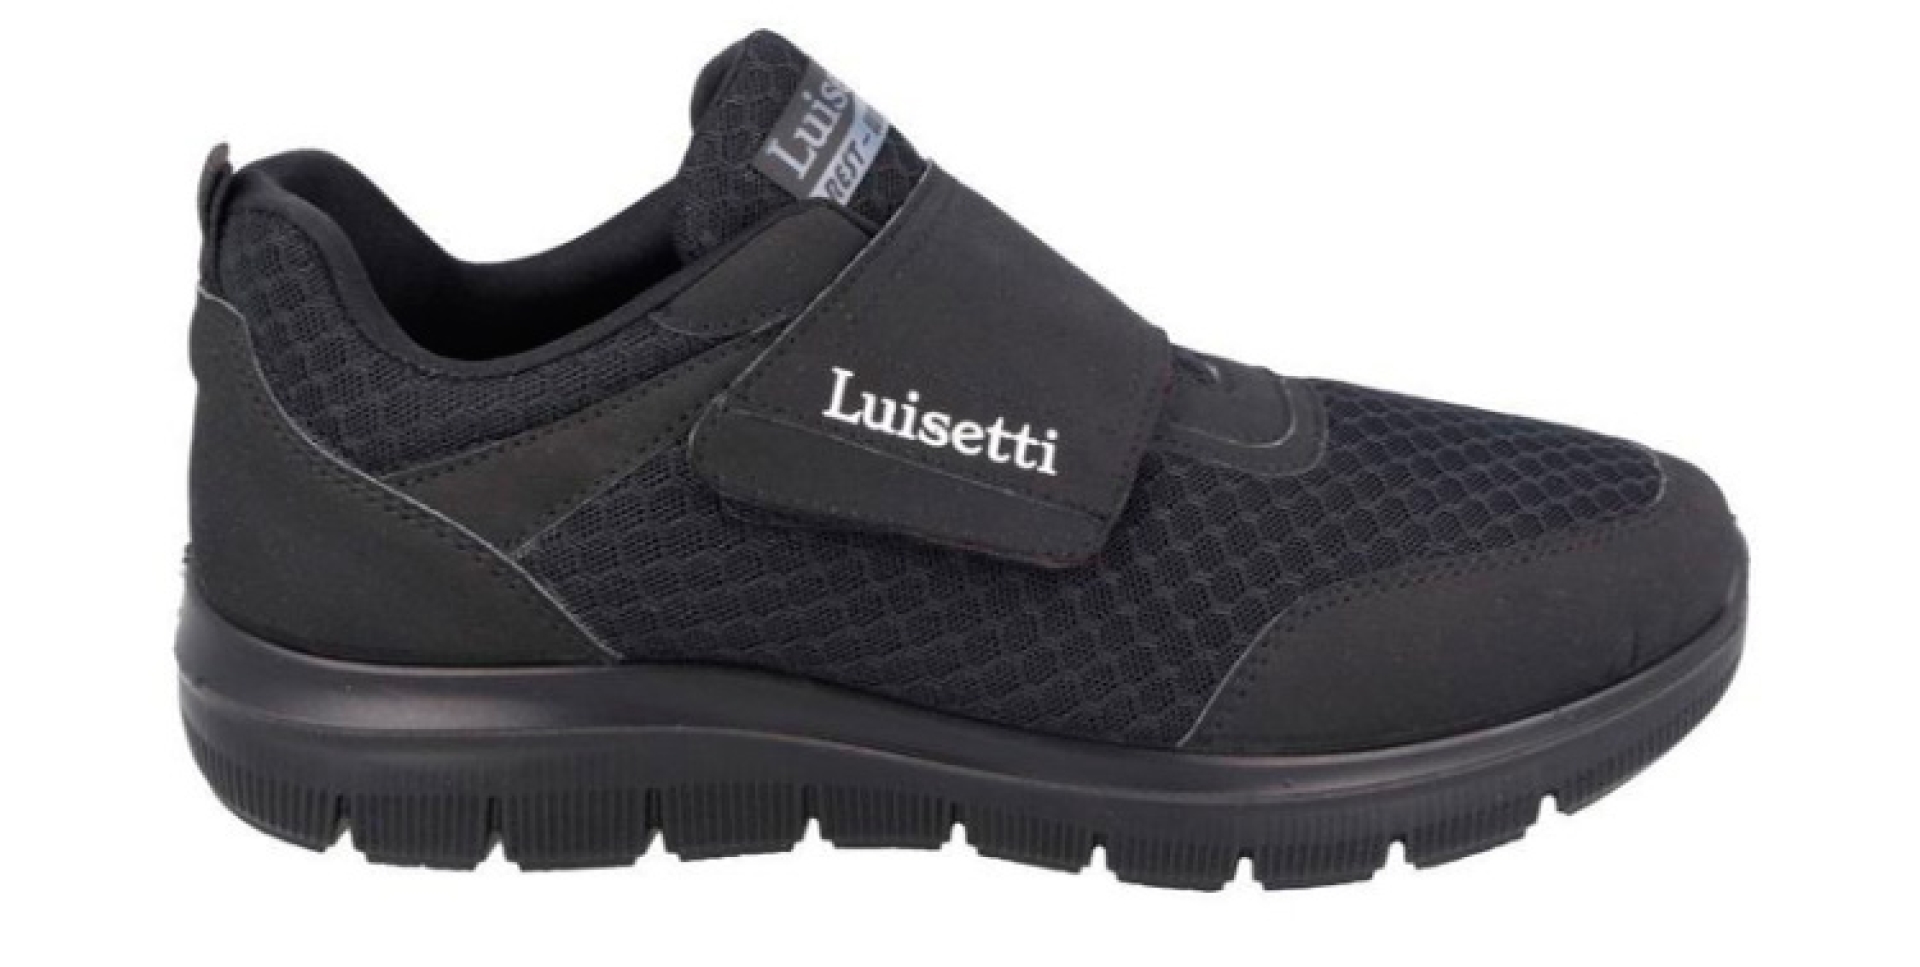 Zapato de hombre fabricado por LUISETTI en color negro, de nylon. H-131